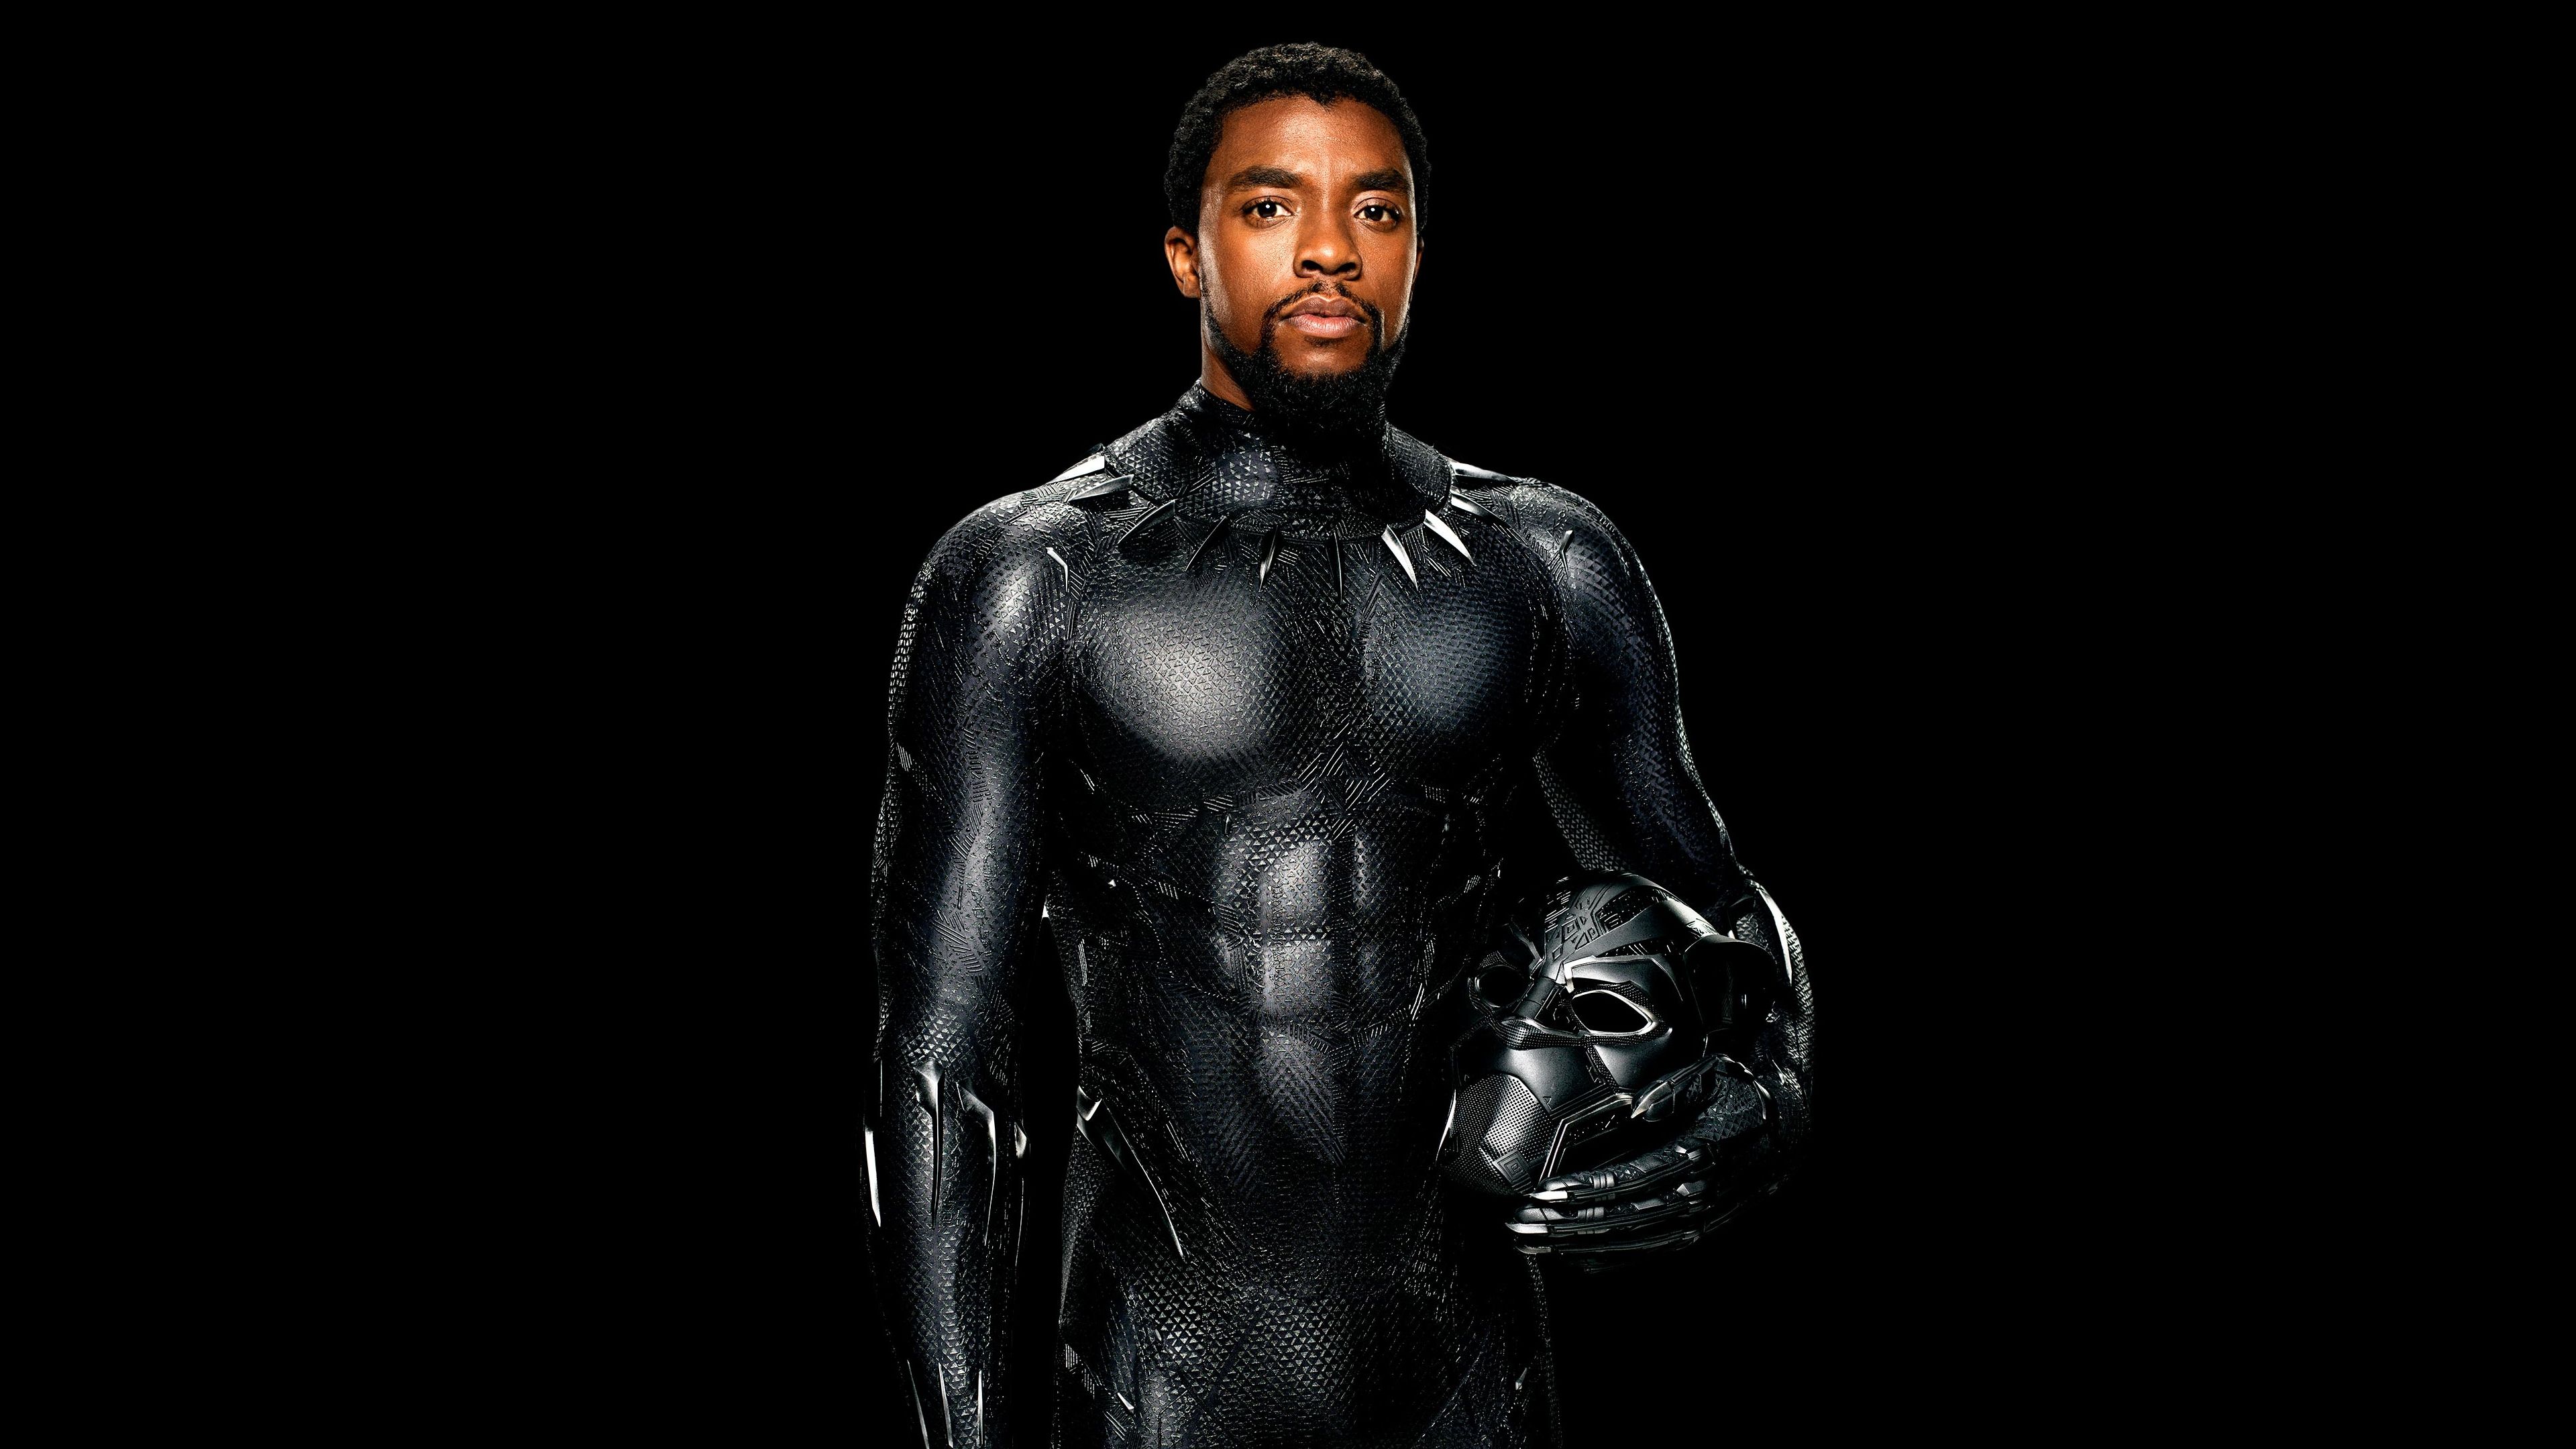 Chadwick Boseman Black Panther 4k, HD Movies, 4k Wallpaper, Image, Background, Photo and Picture